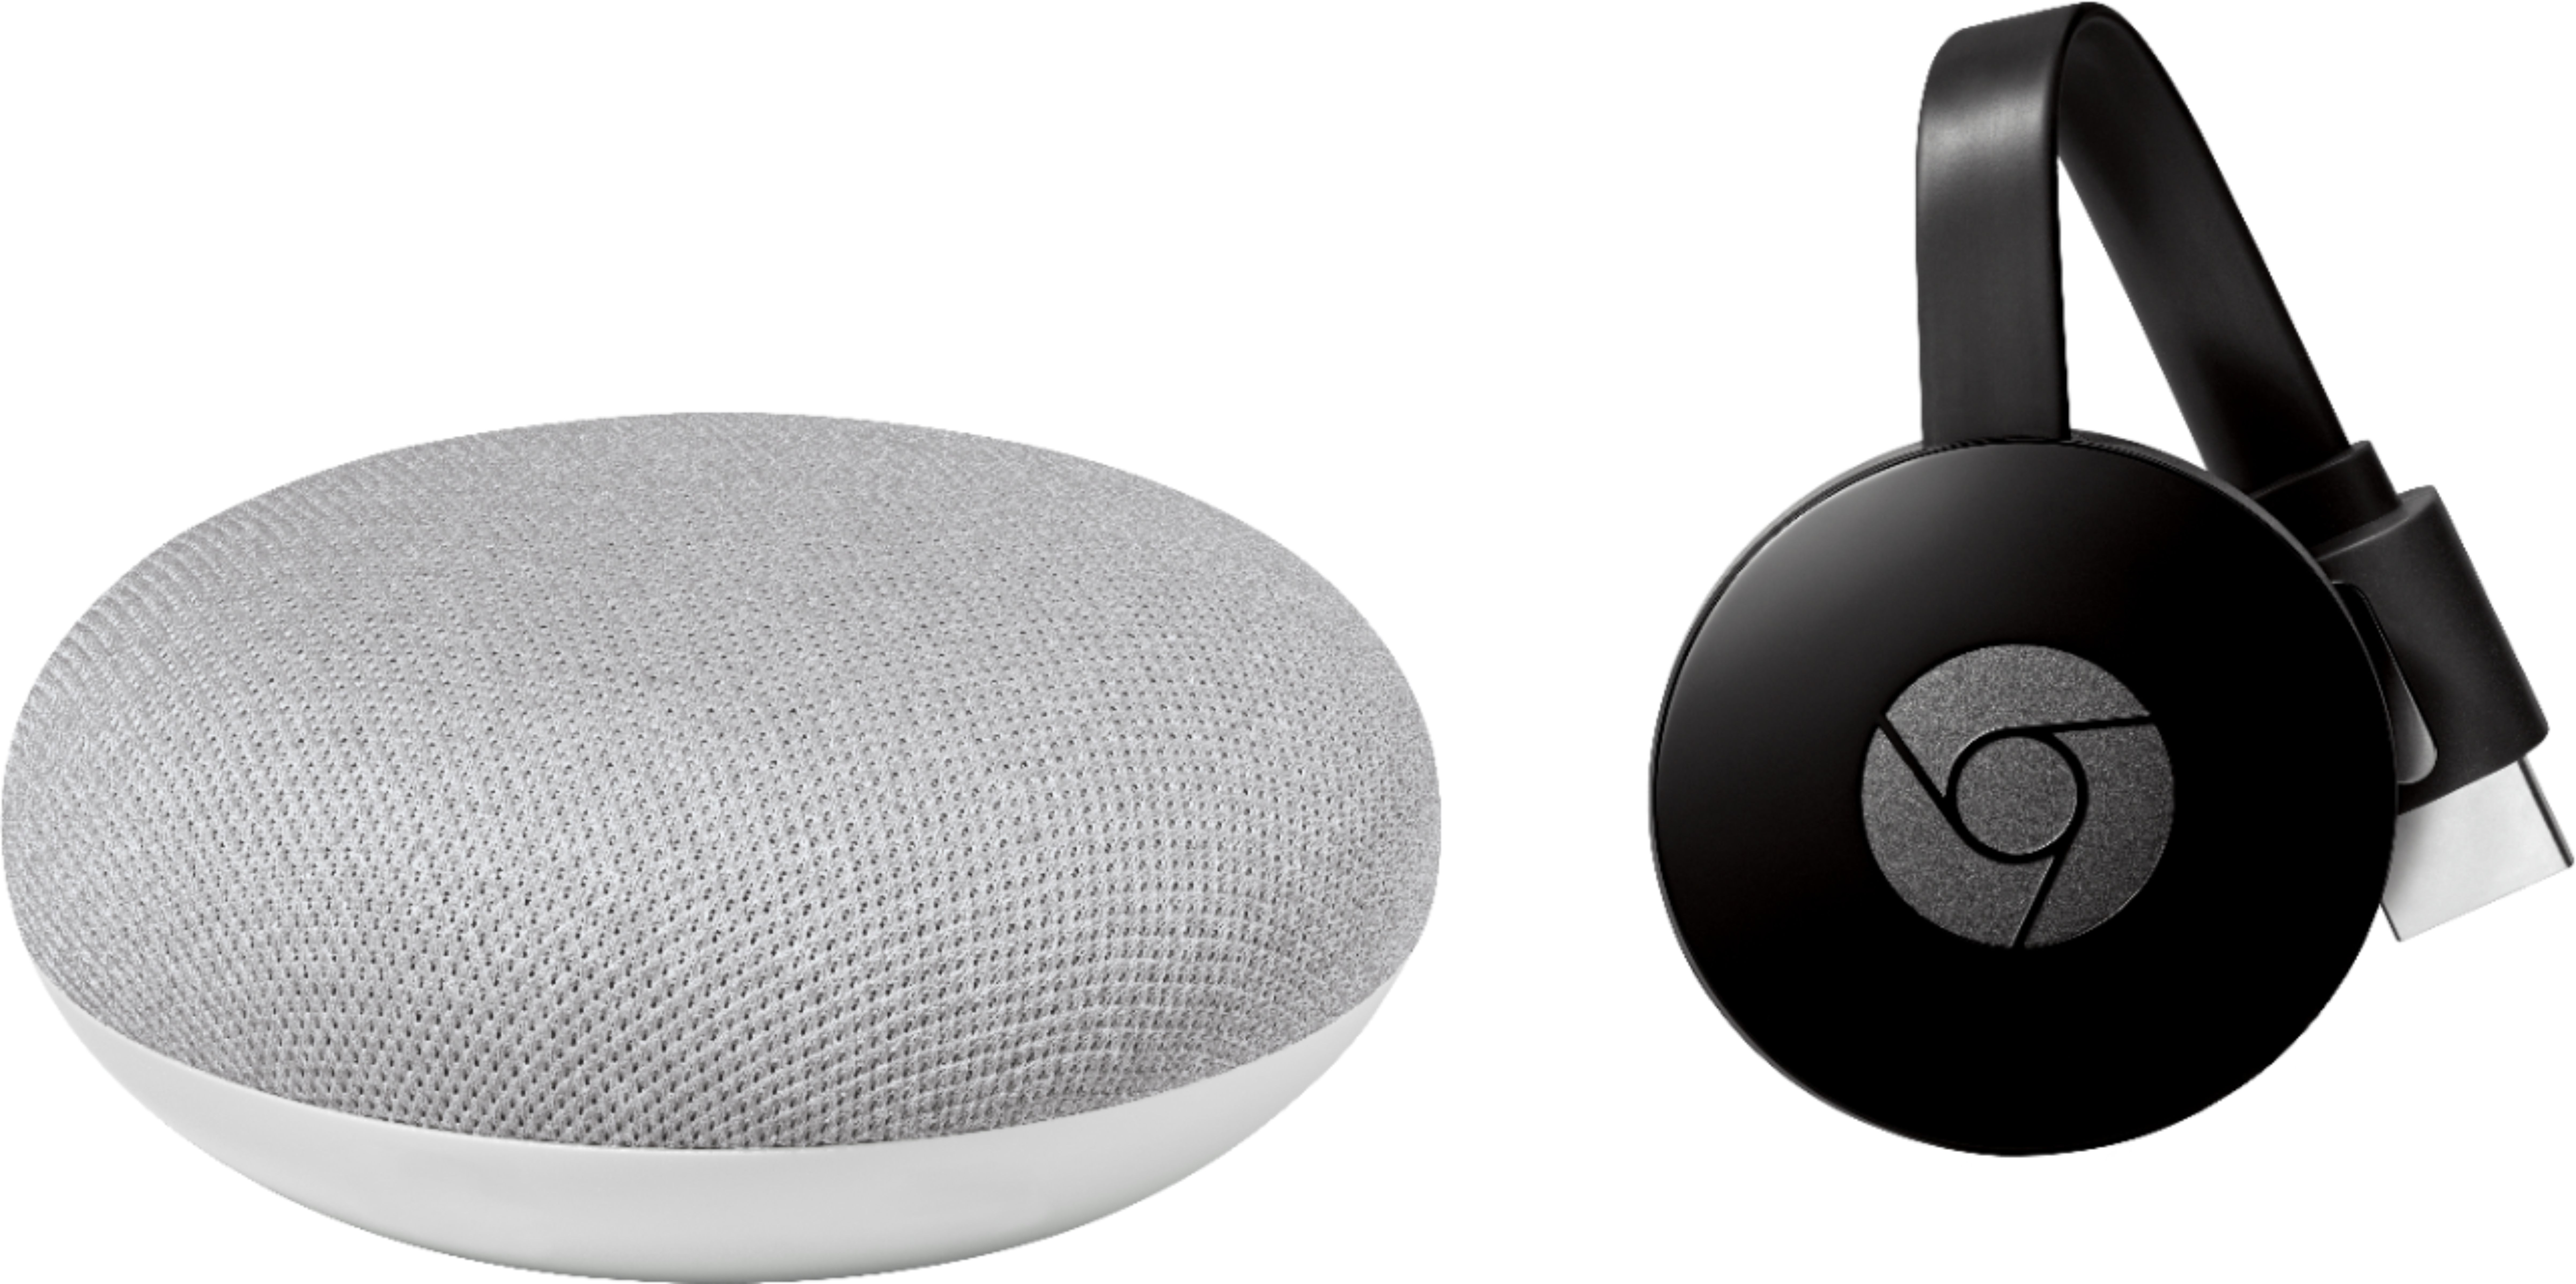 Google Home Accessories, Smart Home Bluetooth